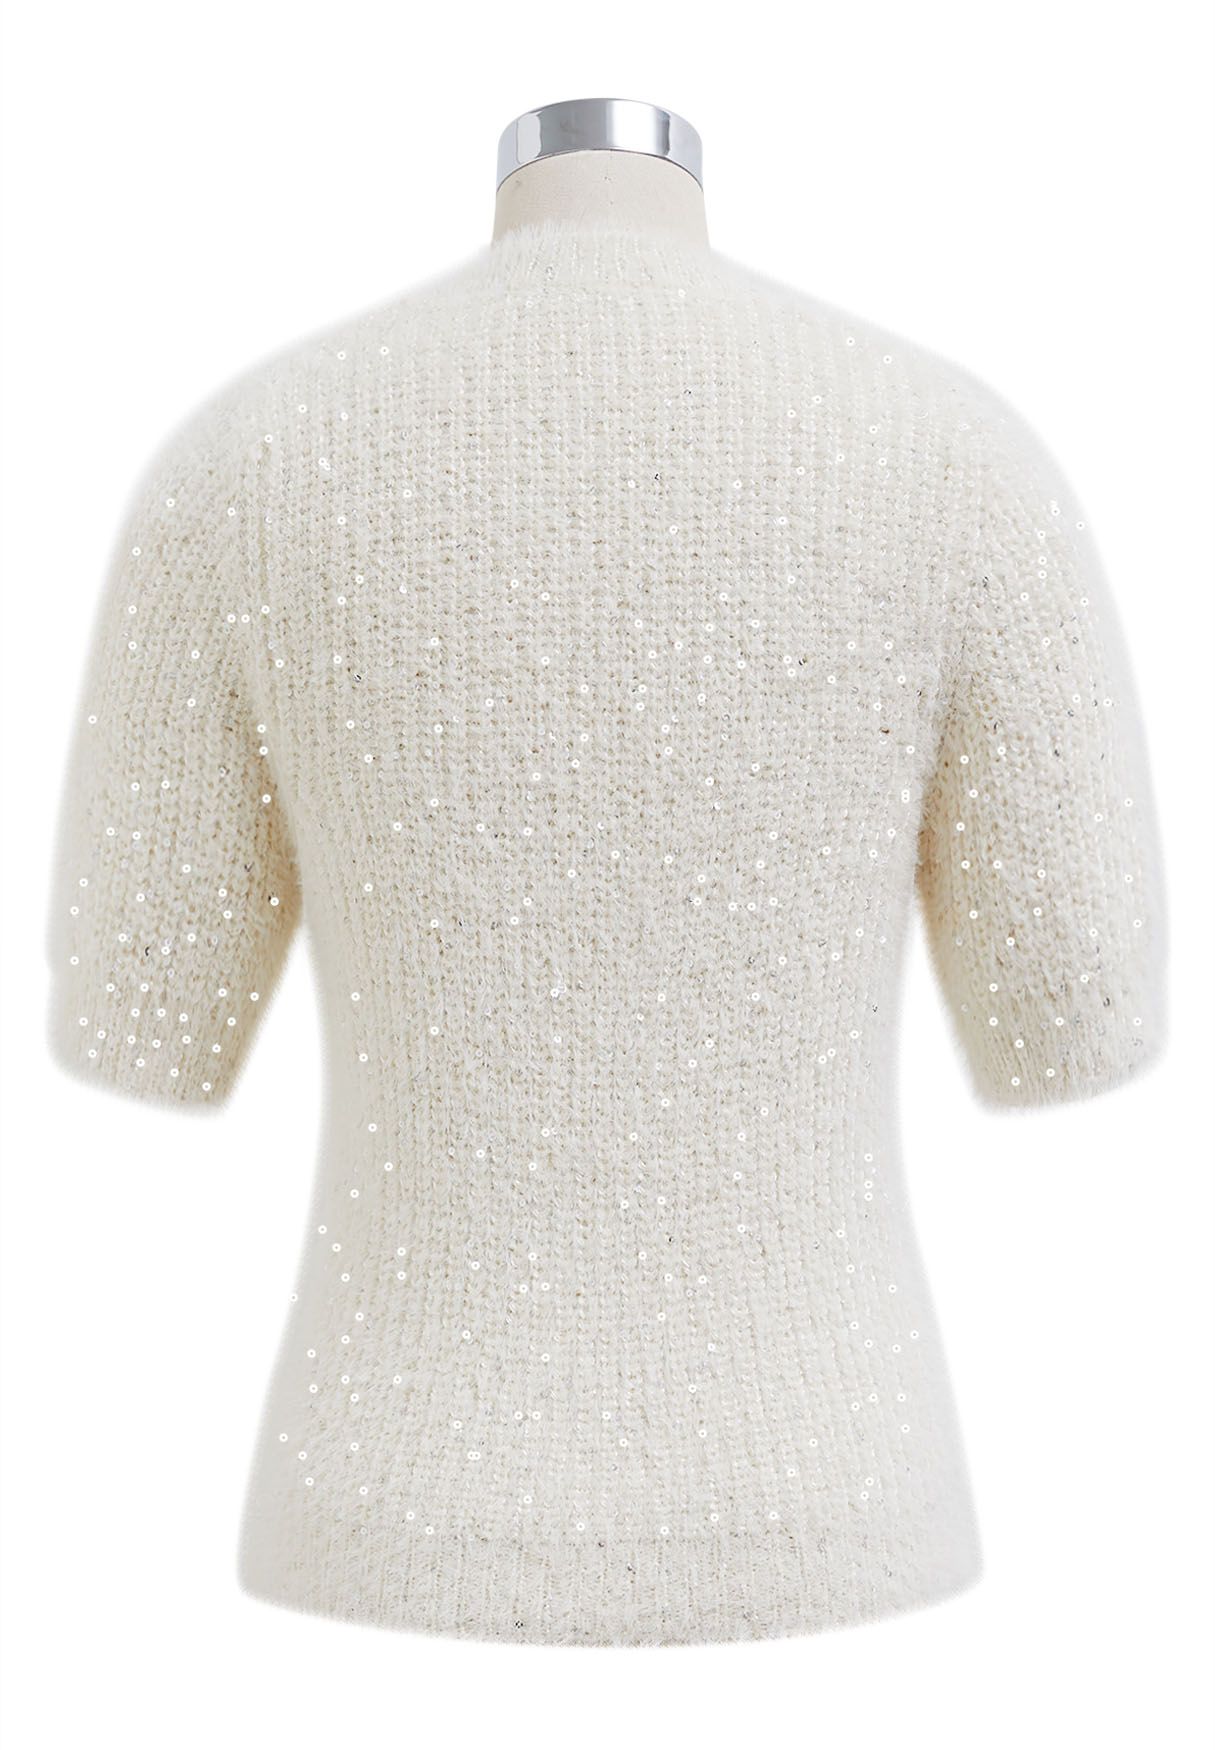 Sequin Fuzzy Short Sleeve Sweater in Cream